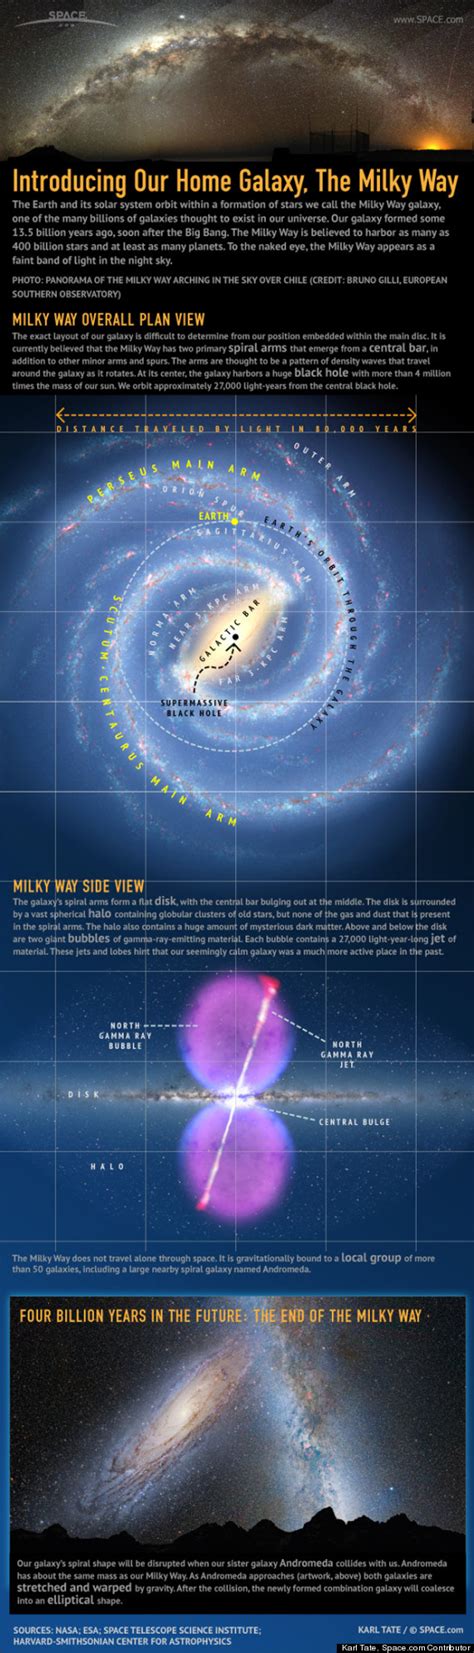 Hubble Data Help Show How Milky Way Galaxy Got Its Spiral Shape